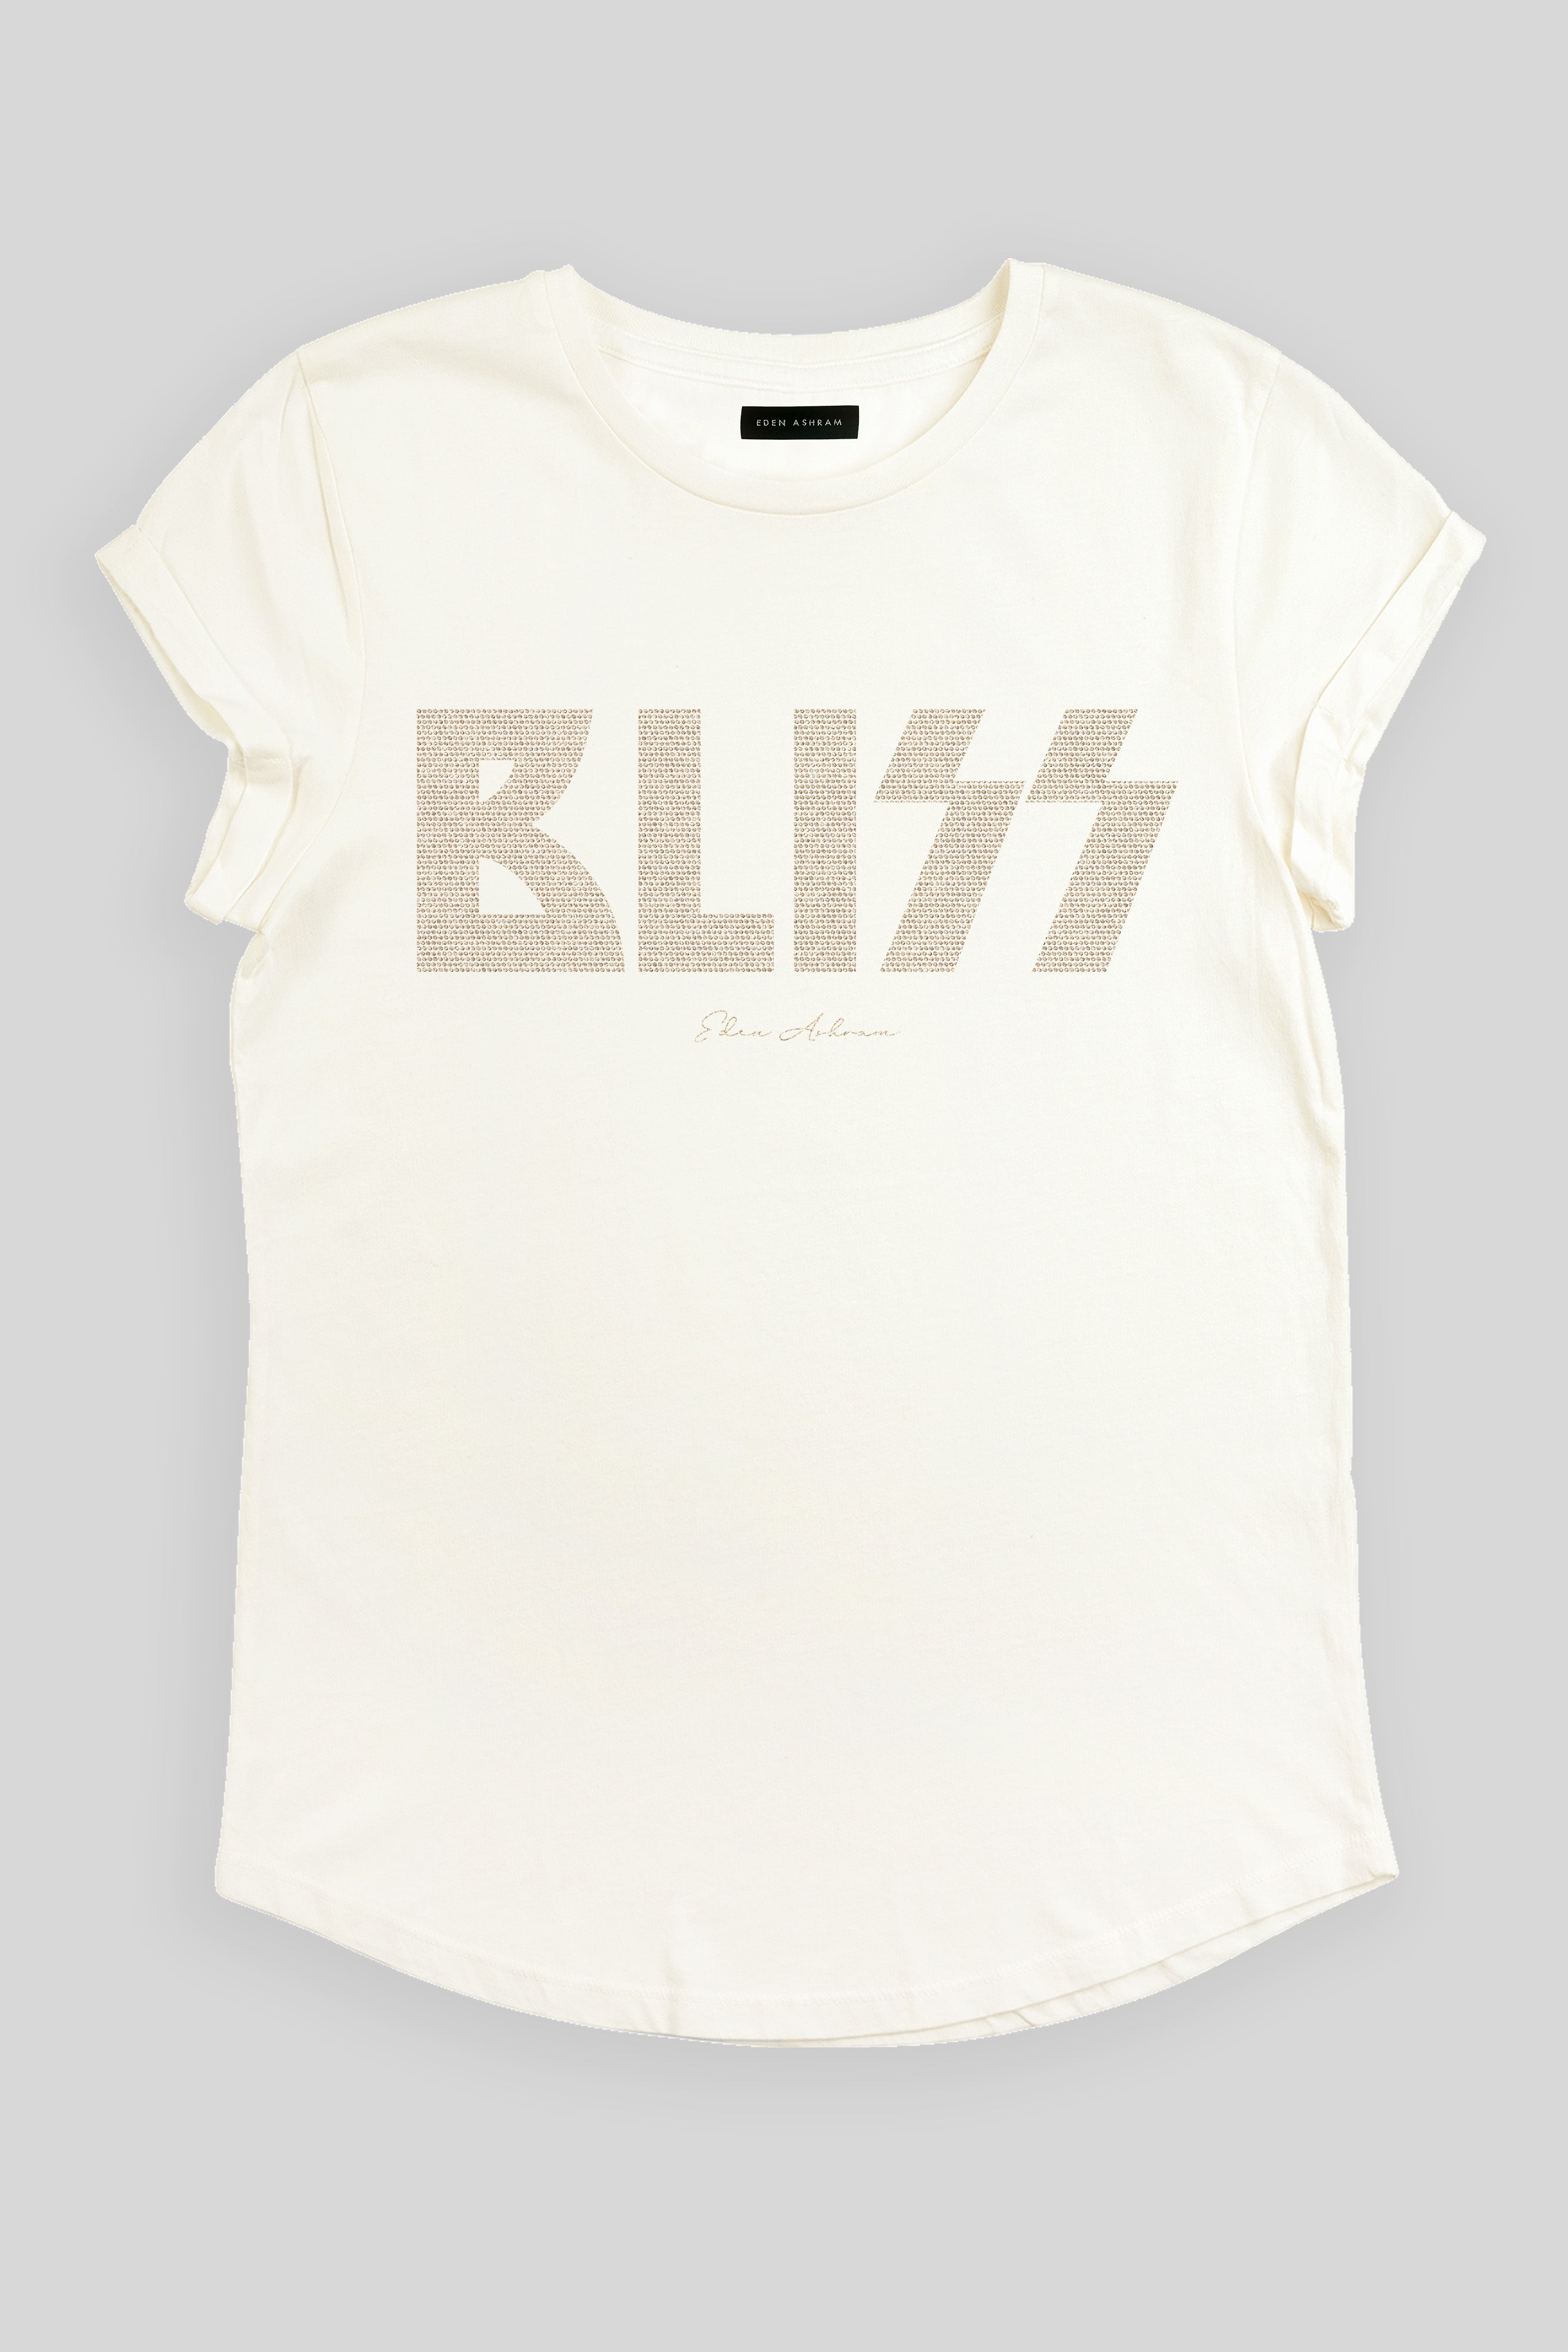 EDEN ASHRAM BLISS Rolled Sleeve Tour T-Shirt Stonewash White | Gold